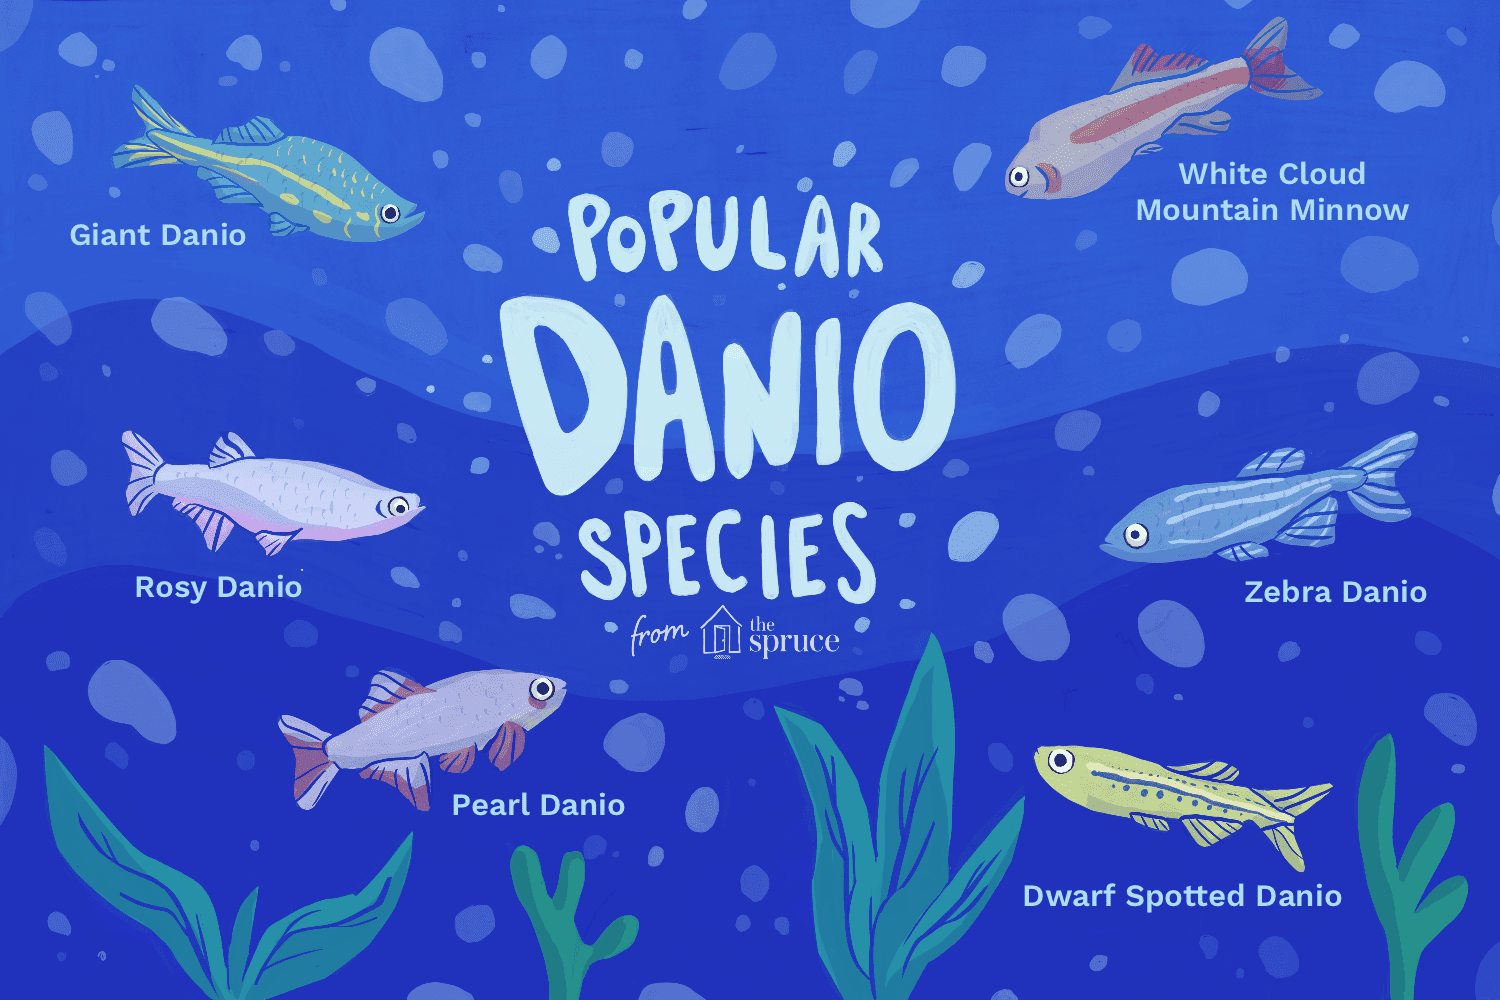 Výběr druhu Danio pro vaše akvárium